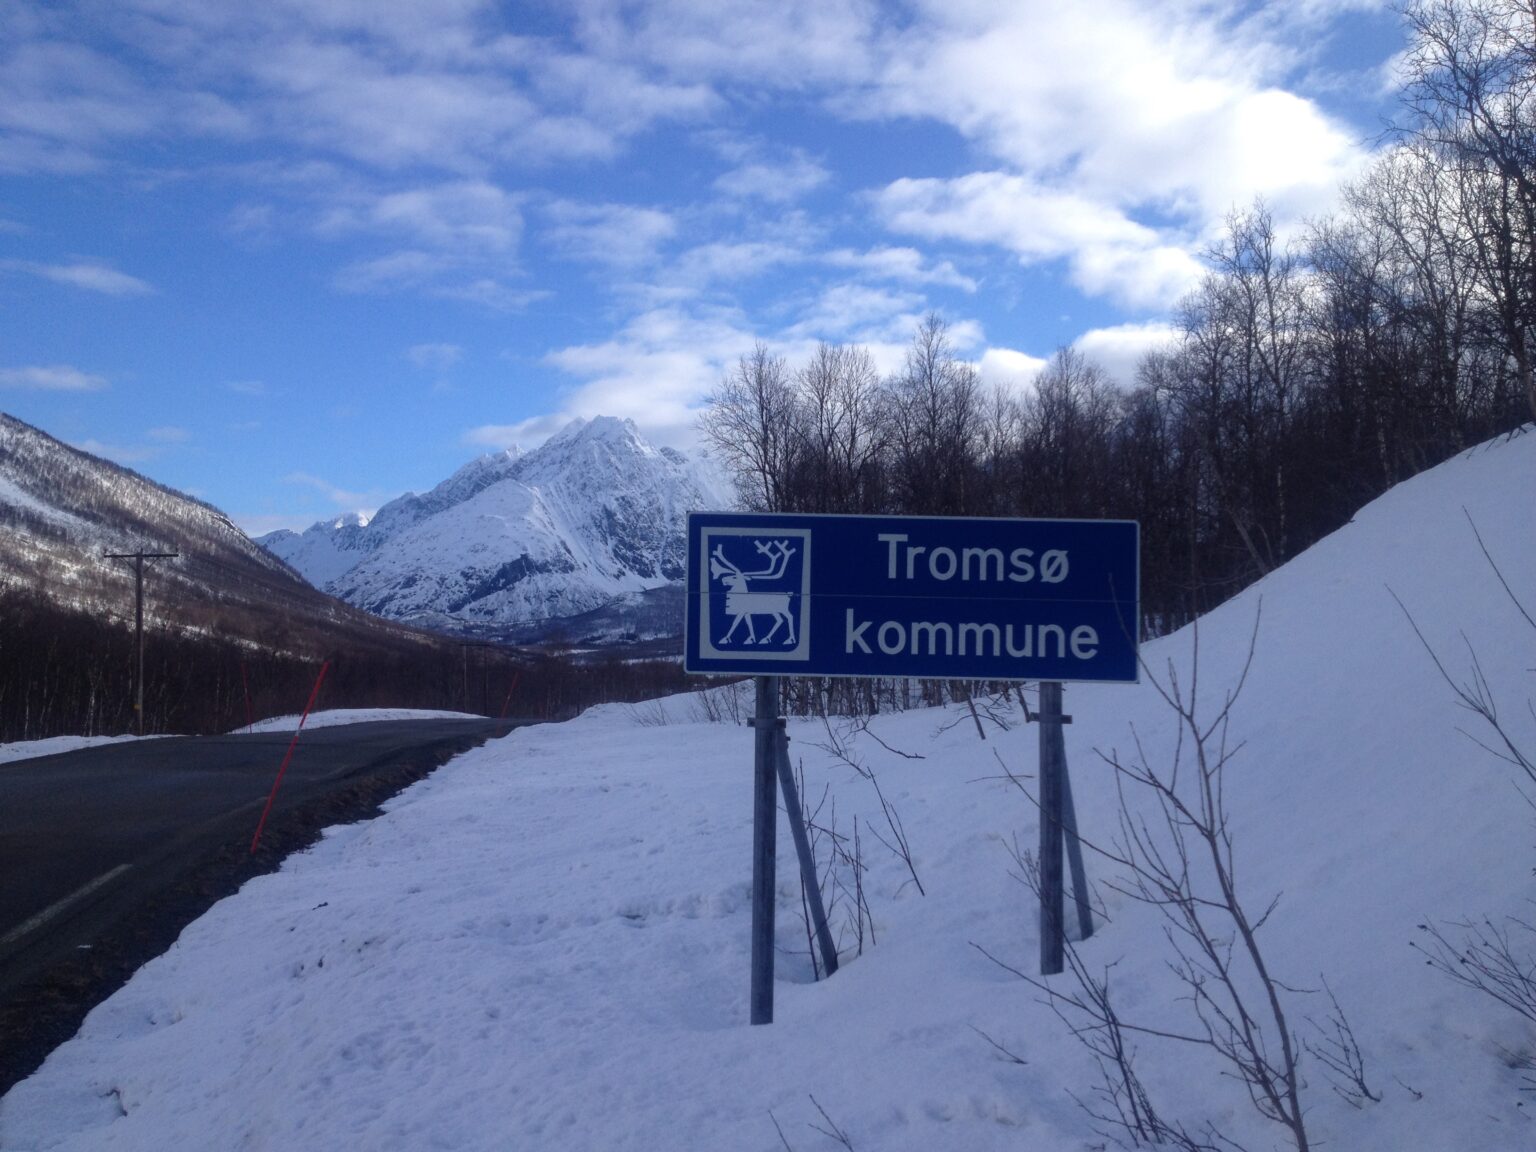 Heading into Tromsø Kommune